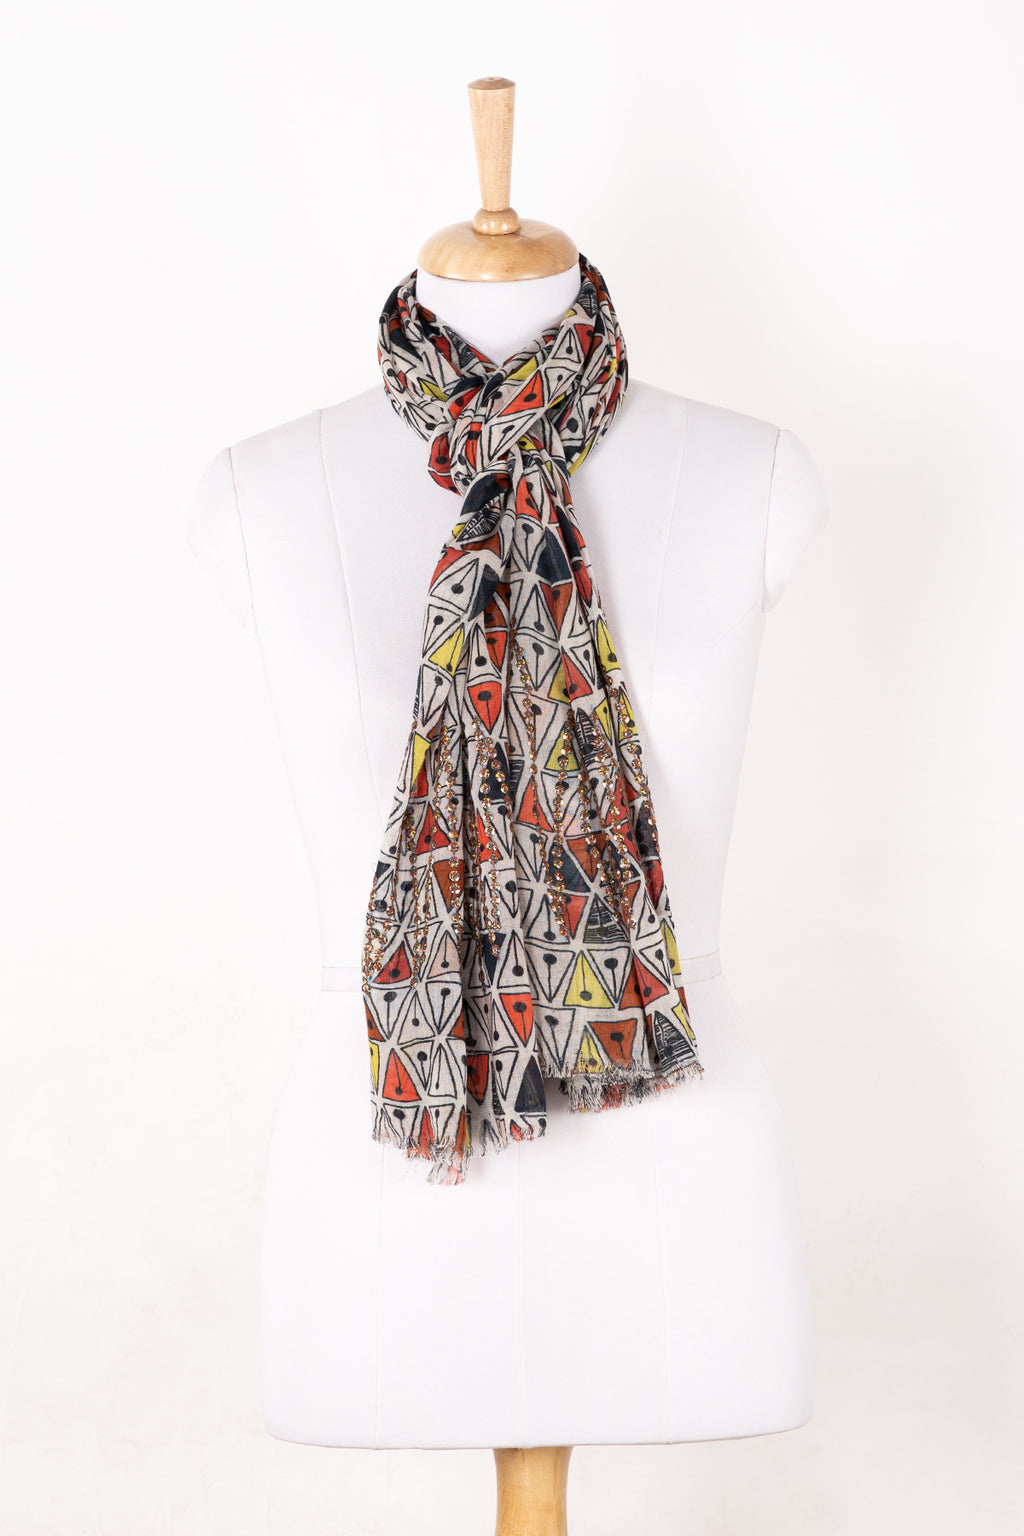 SVEZE Triangle Symmetry Print Cotton Modal Scarf with Embellishment - Multicoloured - Regular Drape